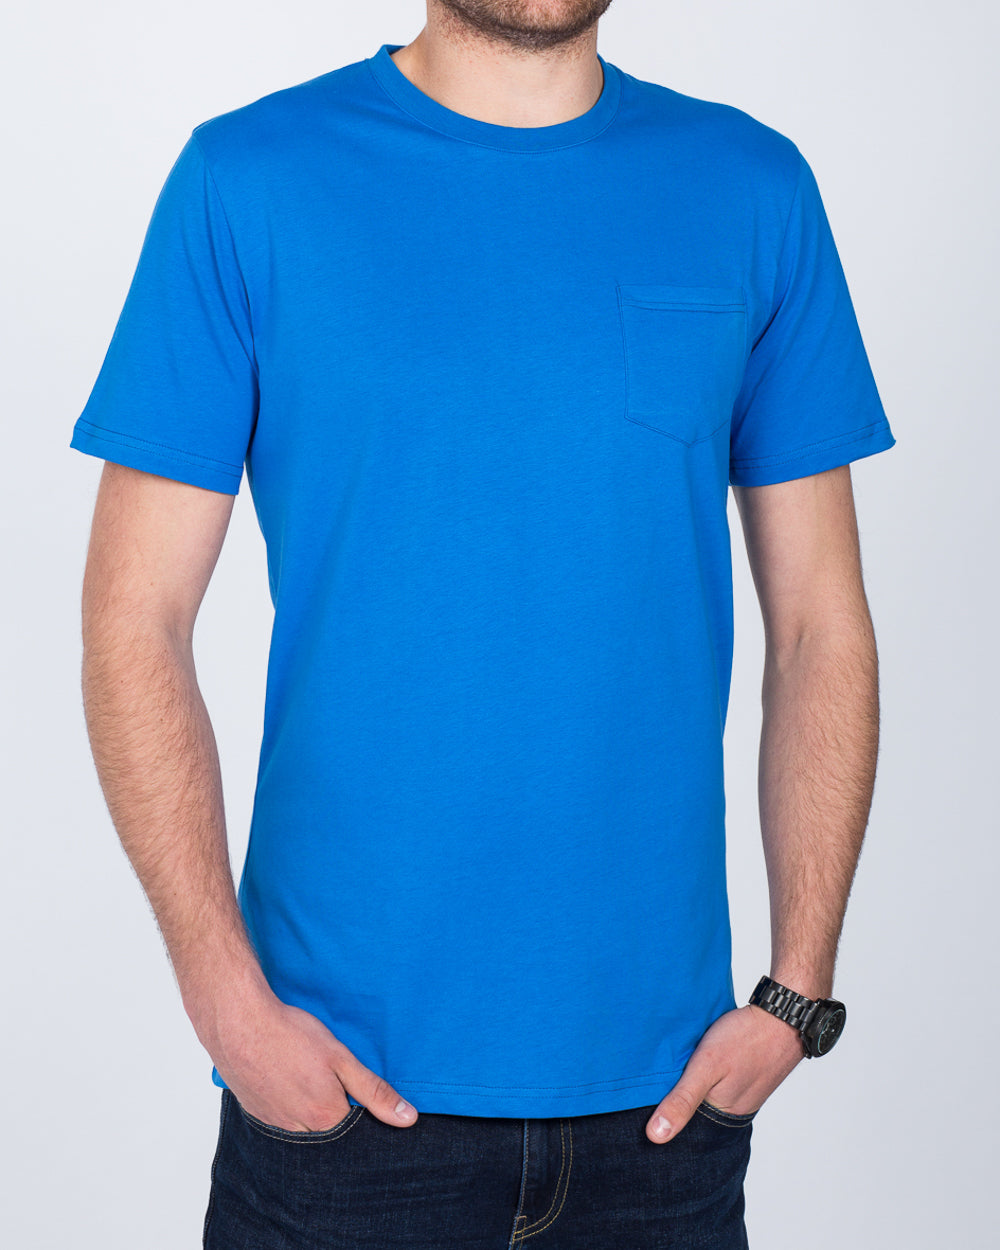 2t Pocket Tall T-Shirt (blue/blue)